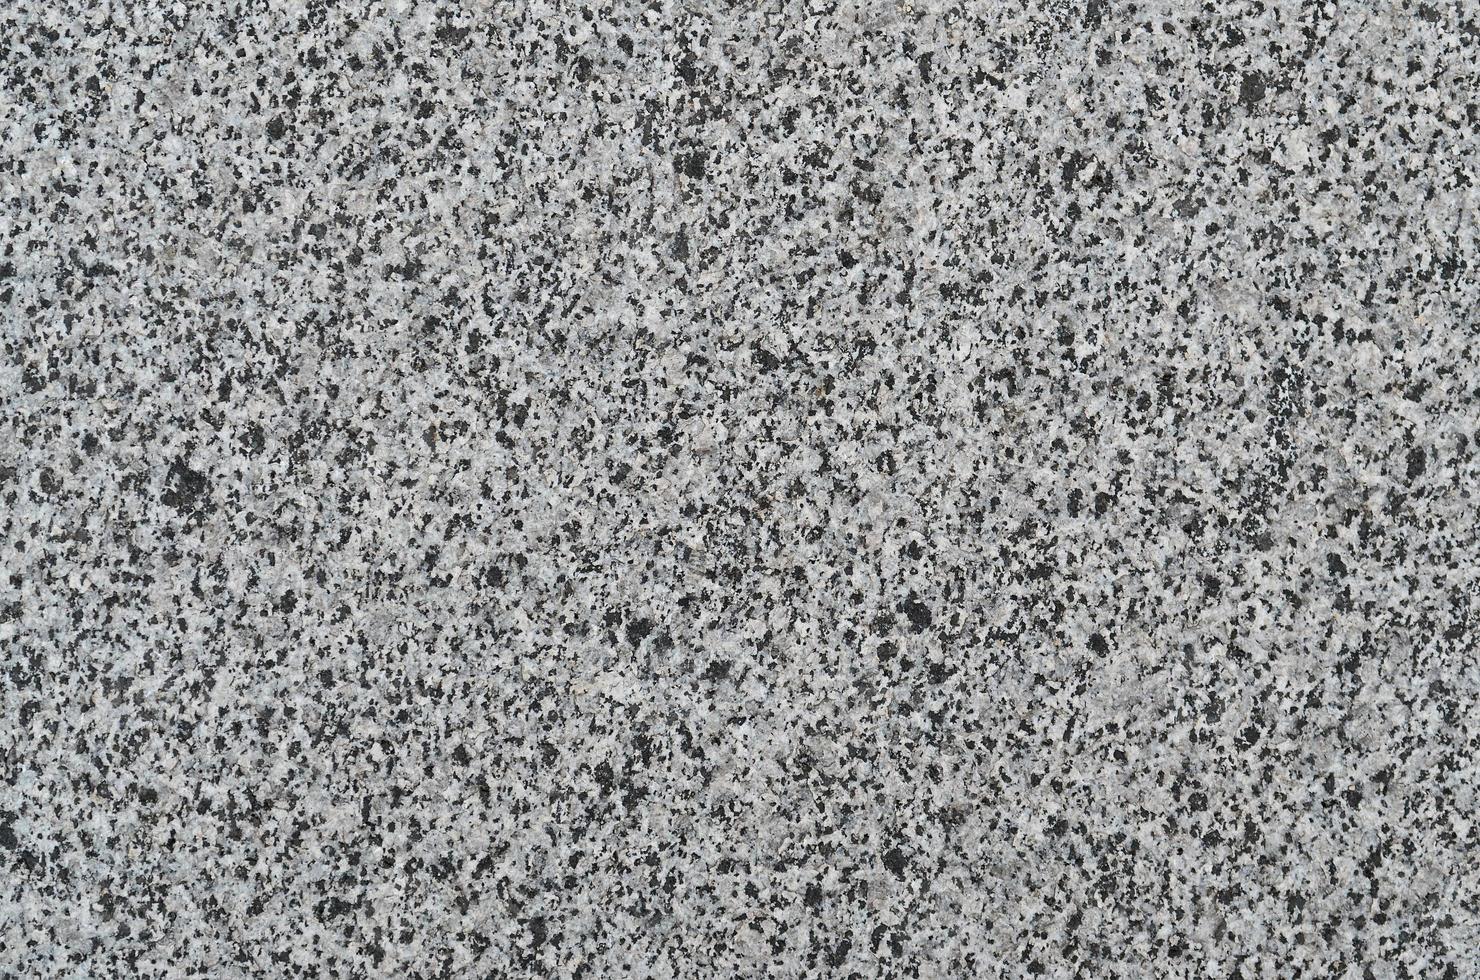 la texture des carreaux de granit massif photo